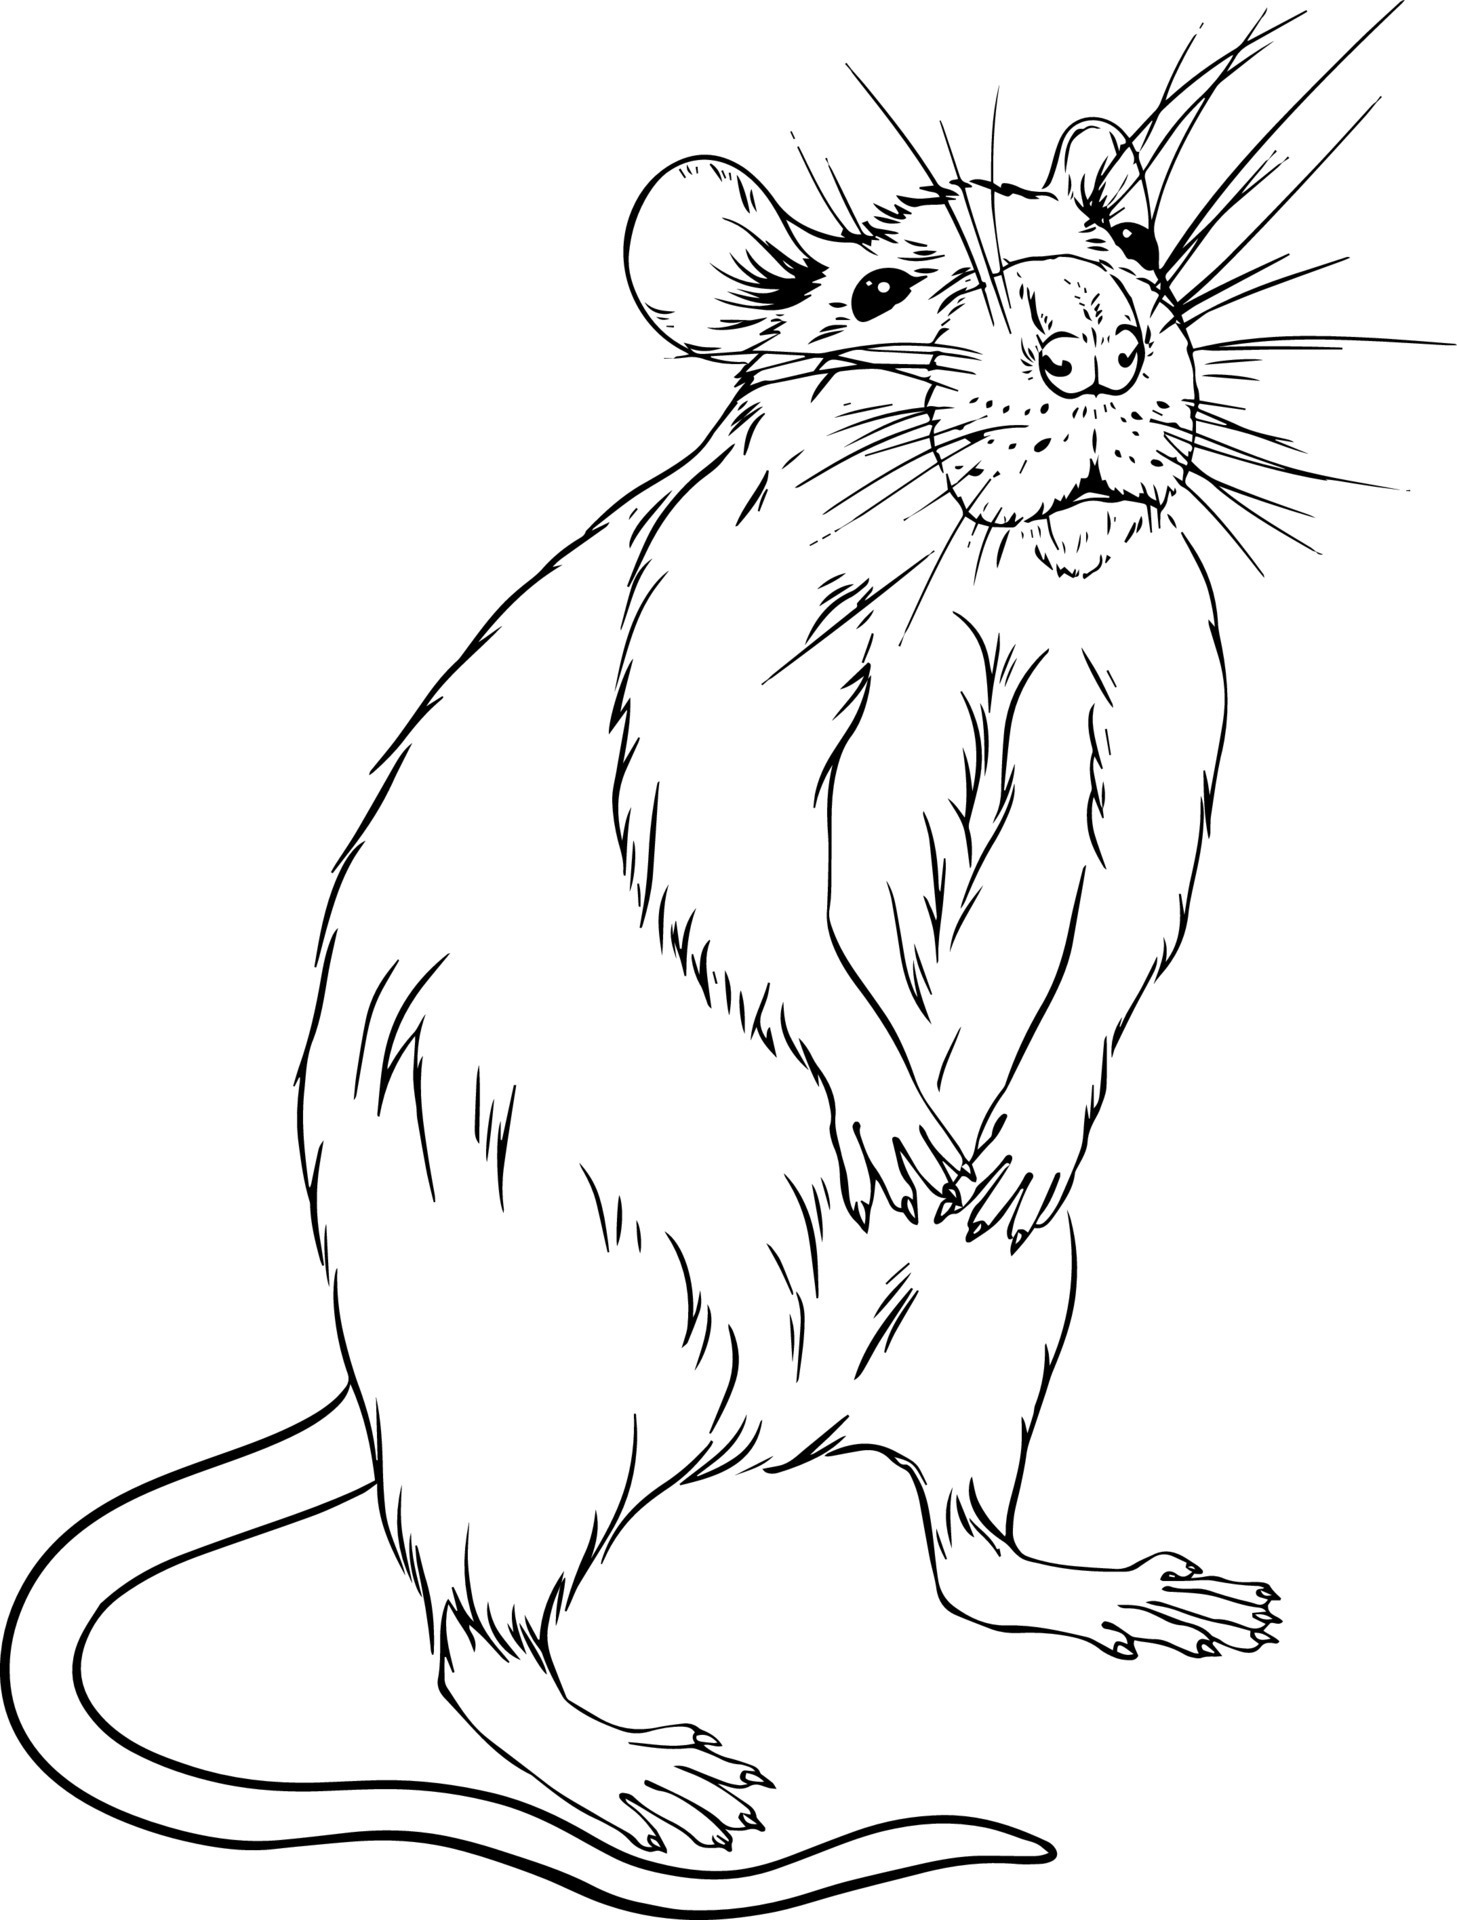 Rat Sketch Practice 12 by nEVErmor on DeviantArt